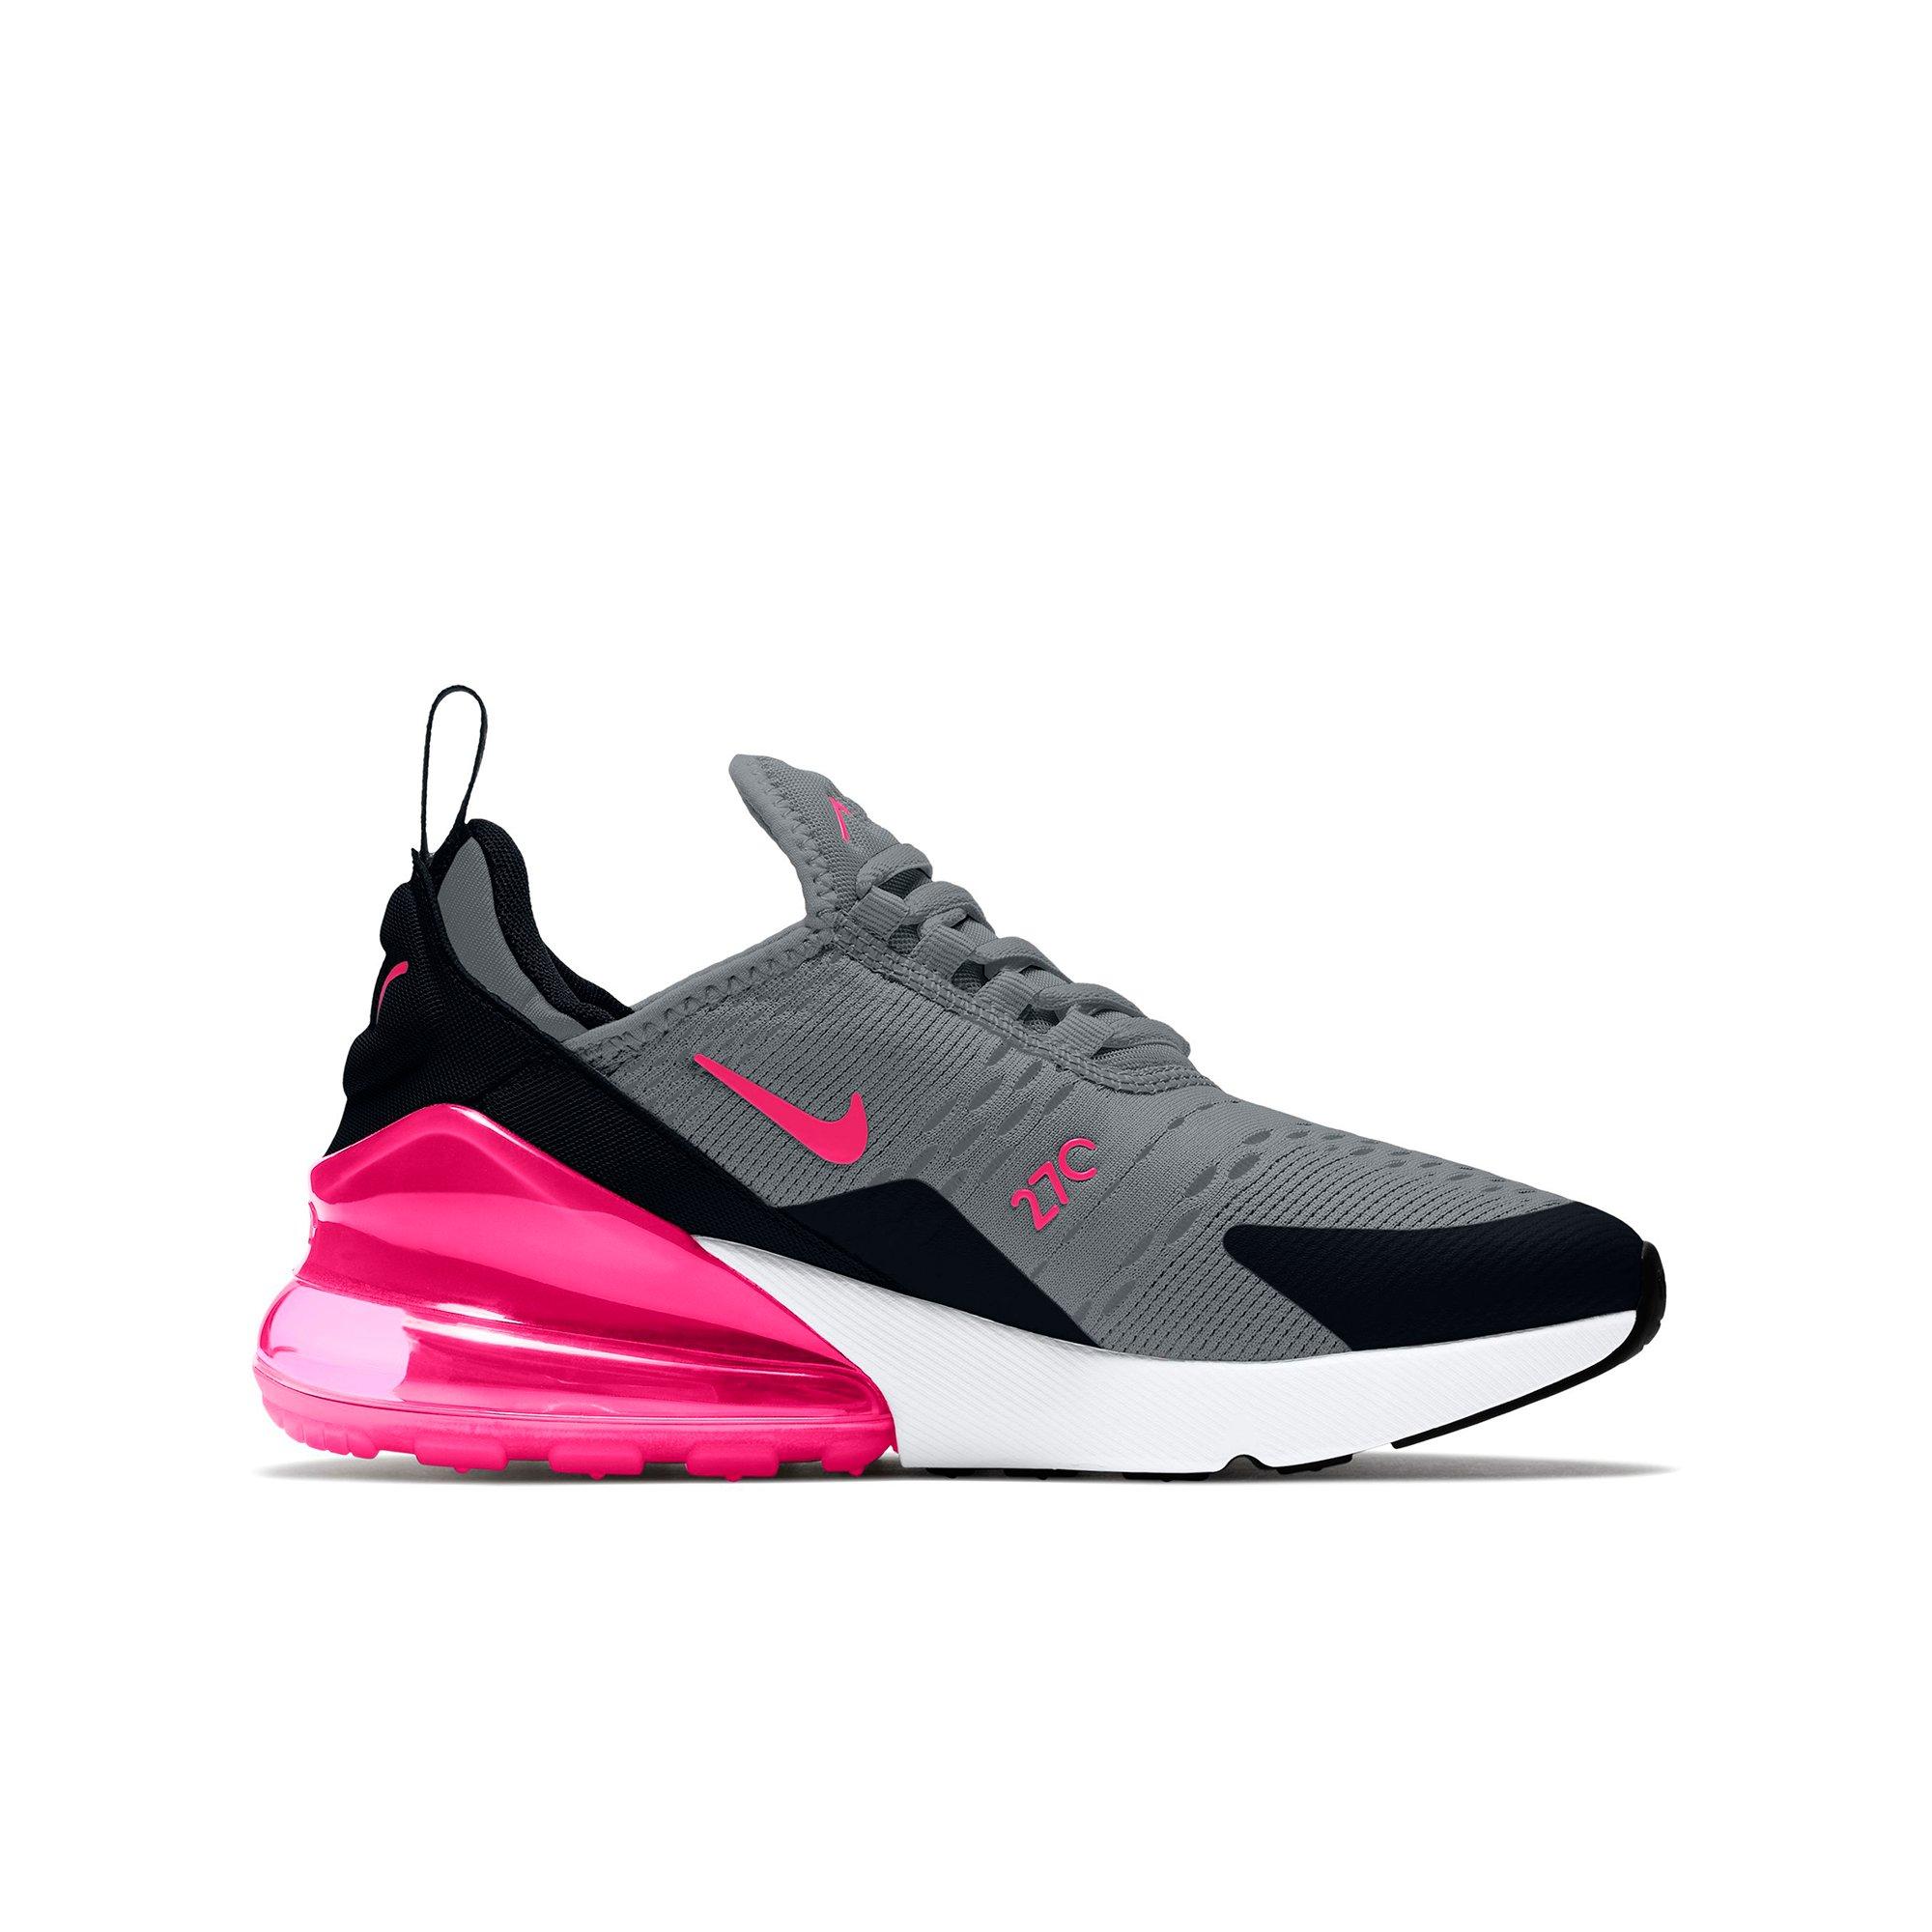 Genre activation second hand Nike Air Max 270 Wild Child "Grey/Pink" Grade School Girls' Shoe